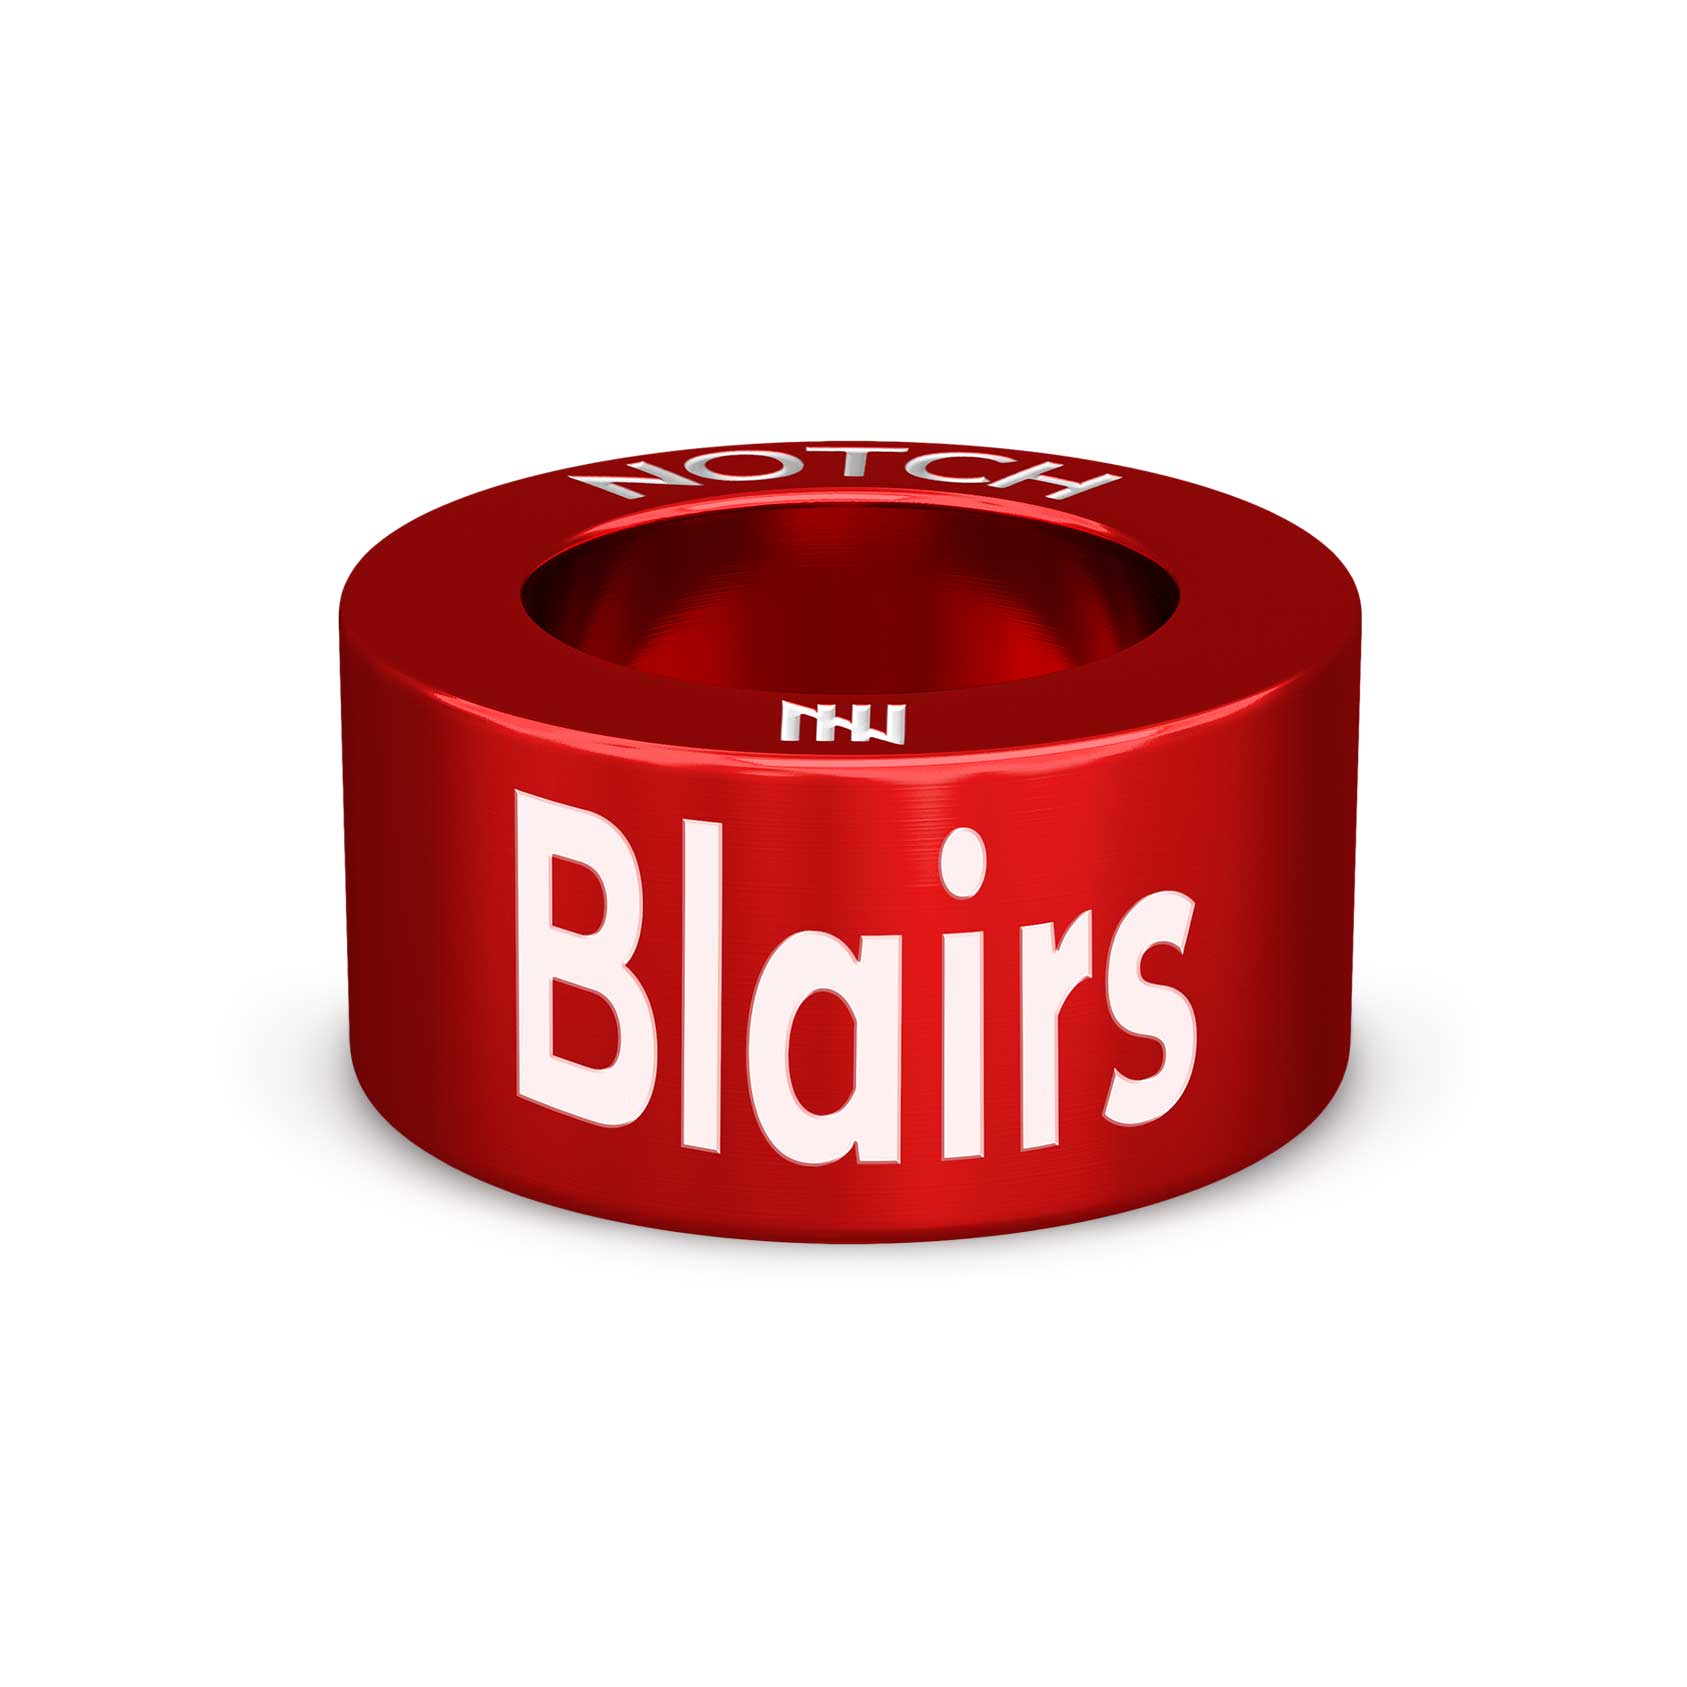 Blairs by Cobbs